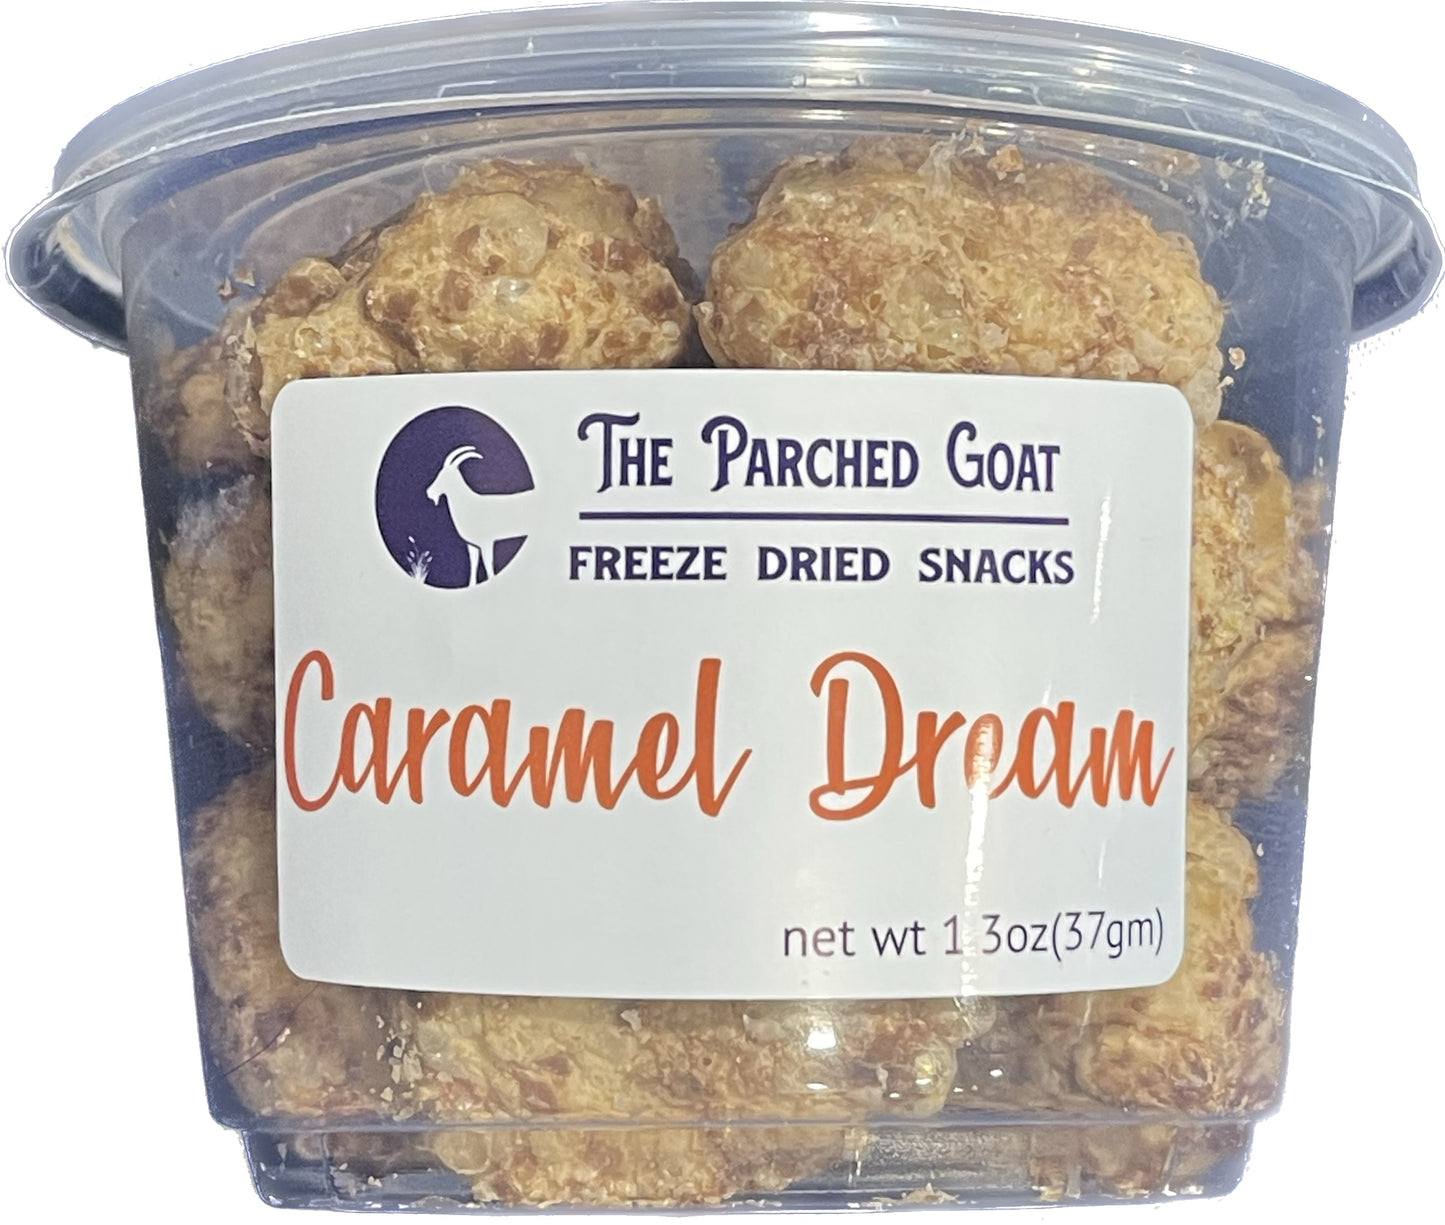 Caramel Dream: Freeze Dried